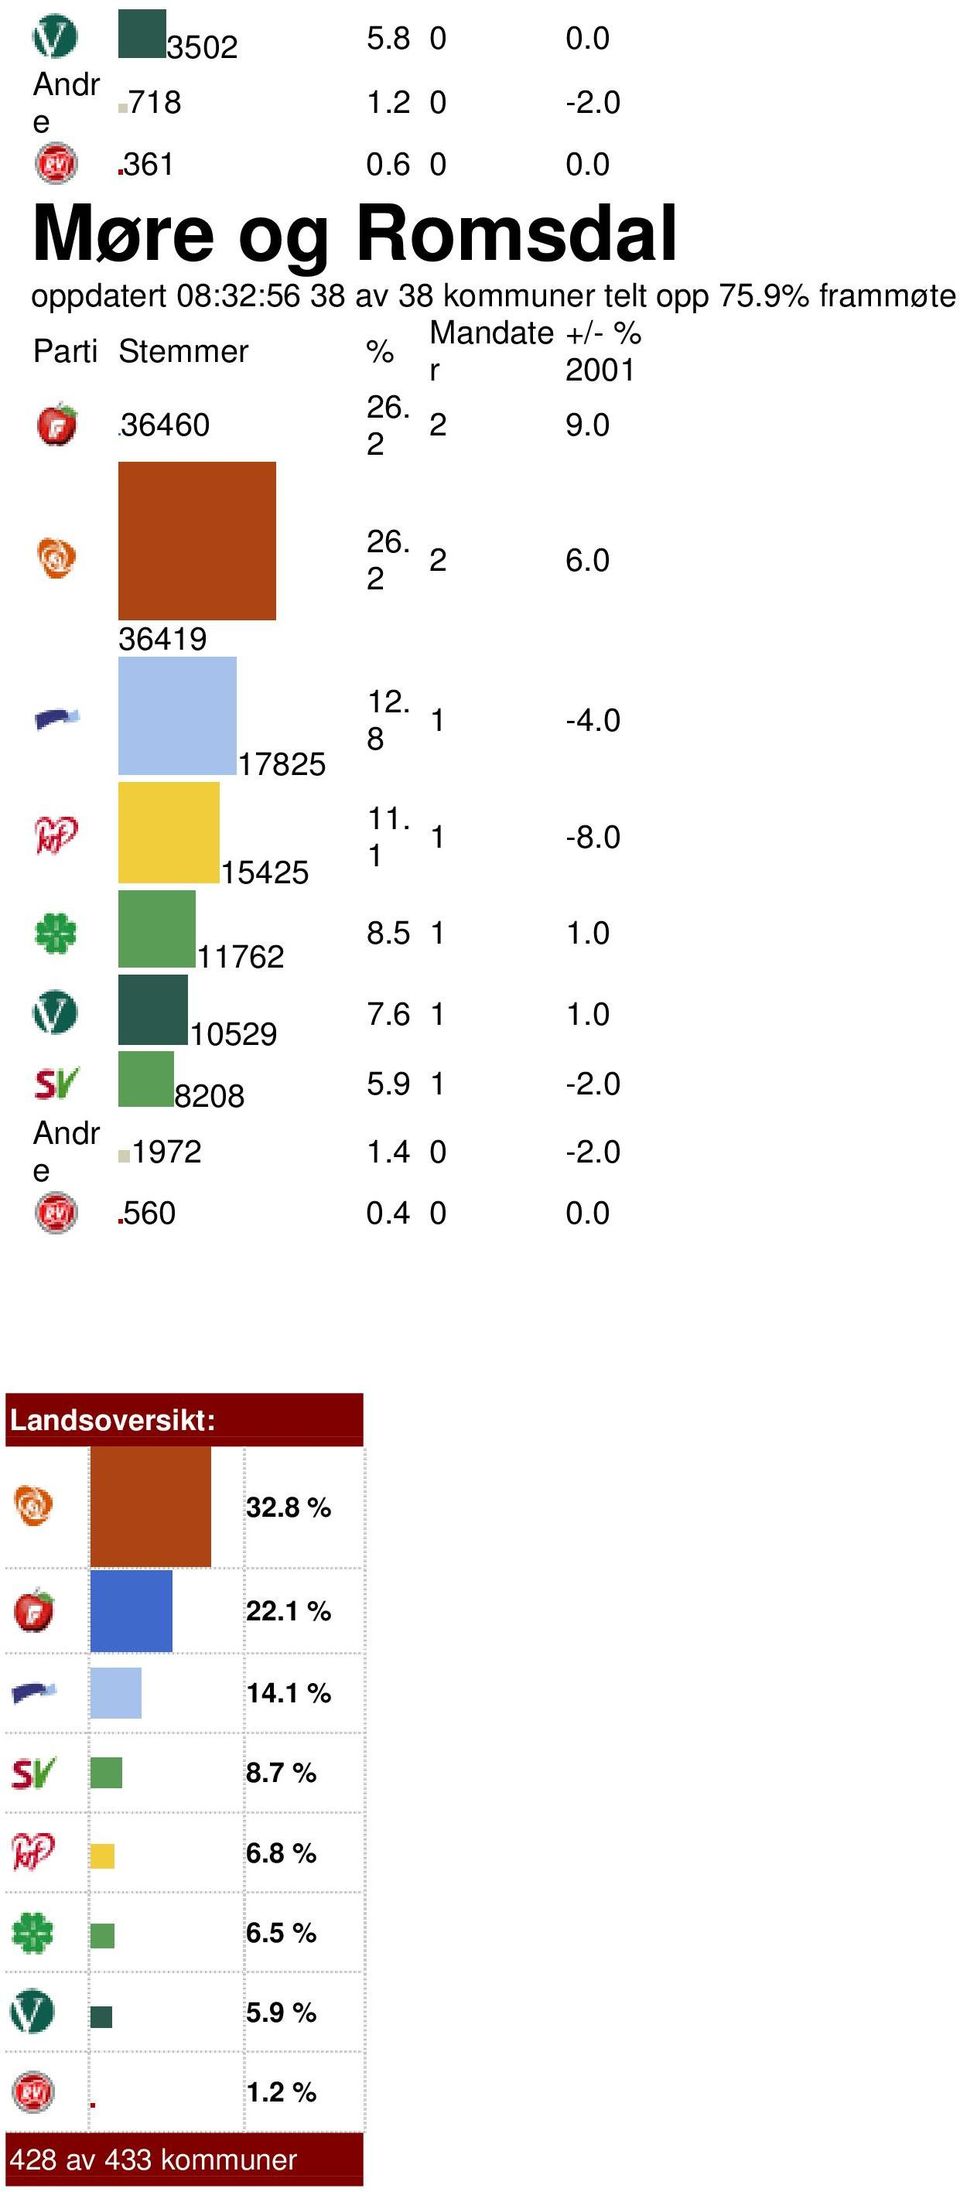 9% frammøt Parti Stmmr % Mandat +/- % 26. 36460 2 9.0 2 26. 2 2 6.